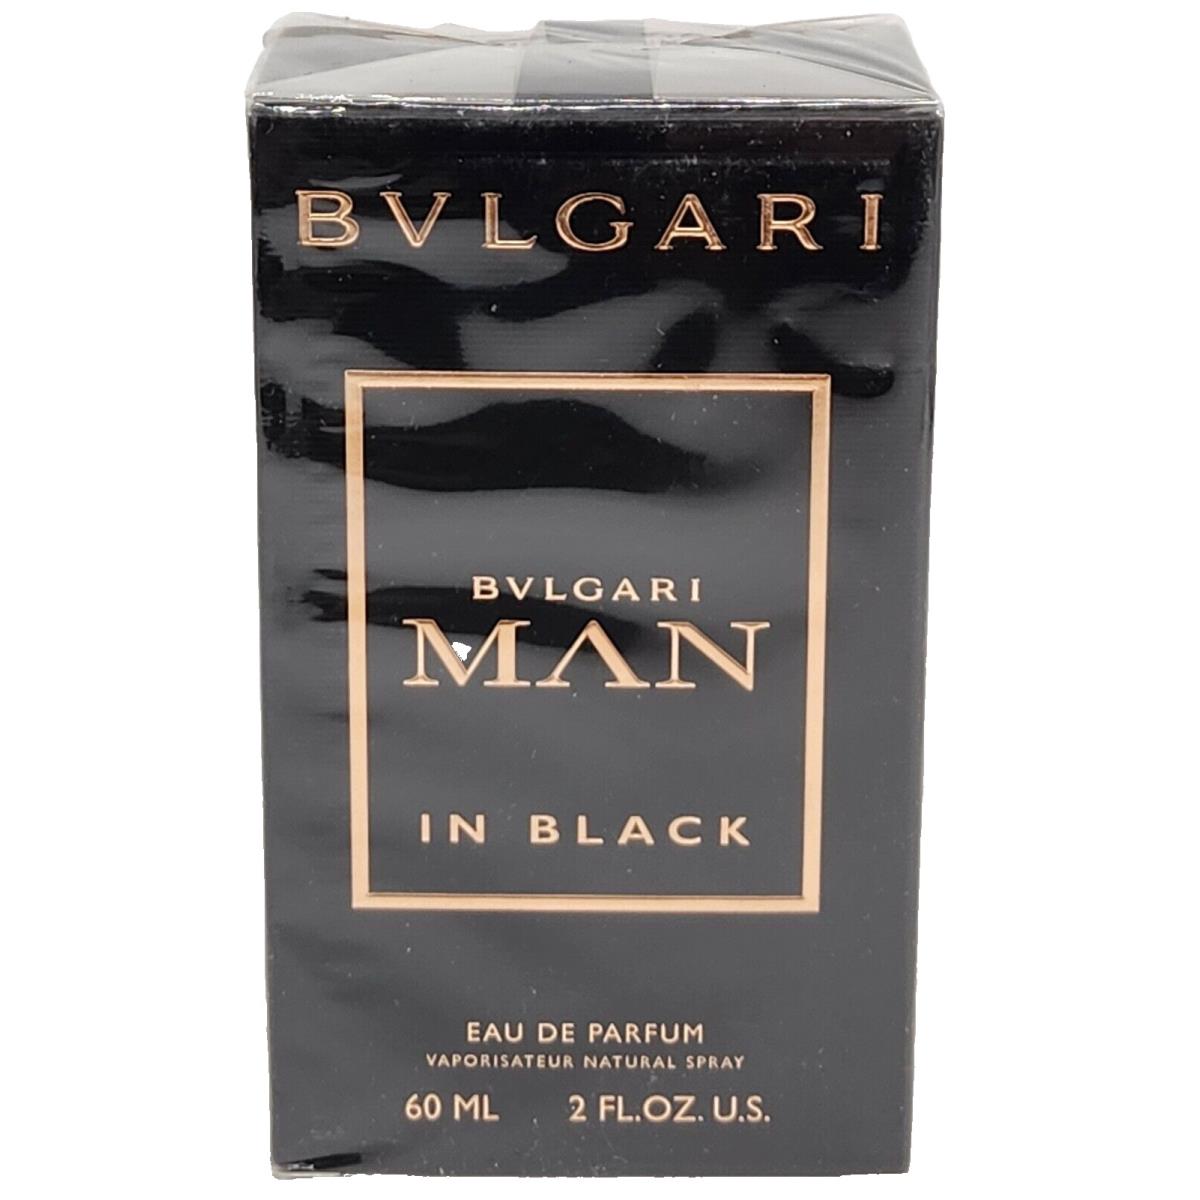 Bvlgari Man In Black For Men By Bvlgari Eau de Parfum Spray 2 Fl. oz